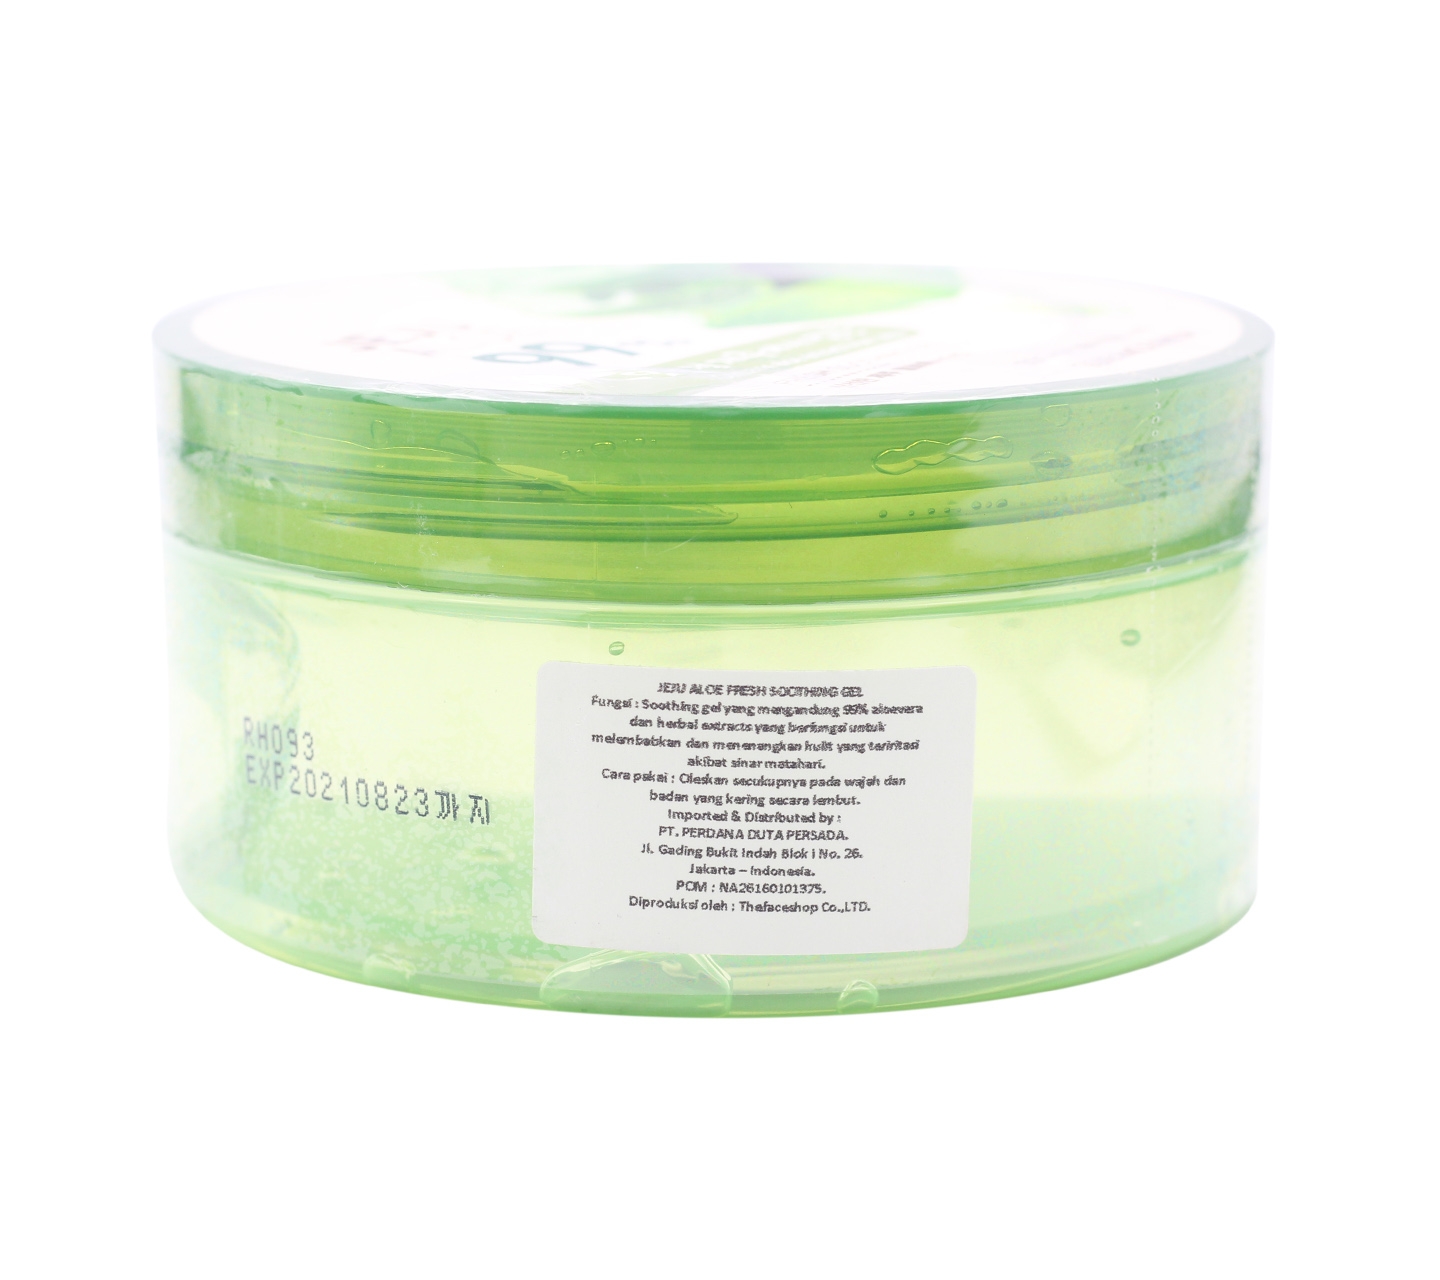 The Face Shop Jeju Aloe 99% Fresh Soothing Gel Skin Care